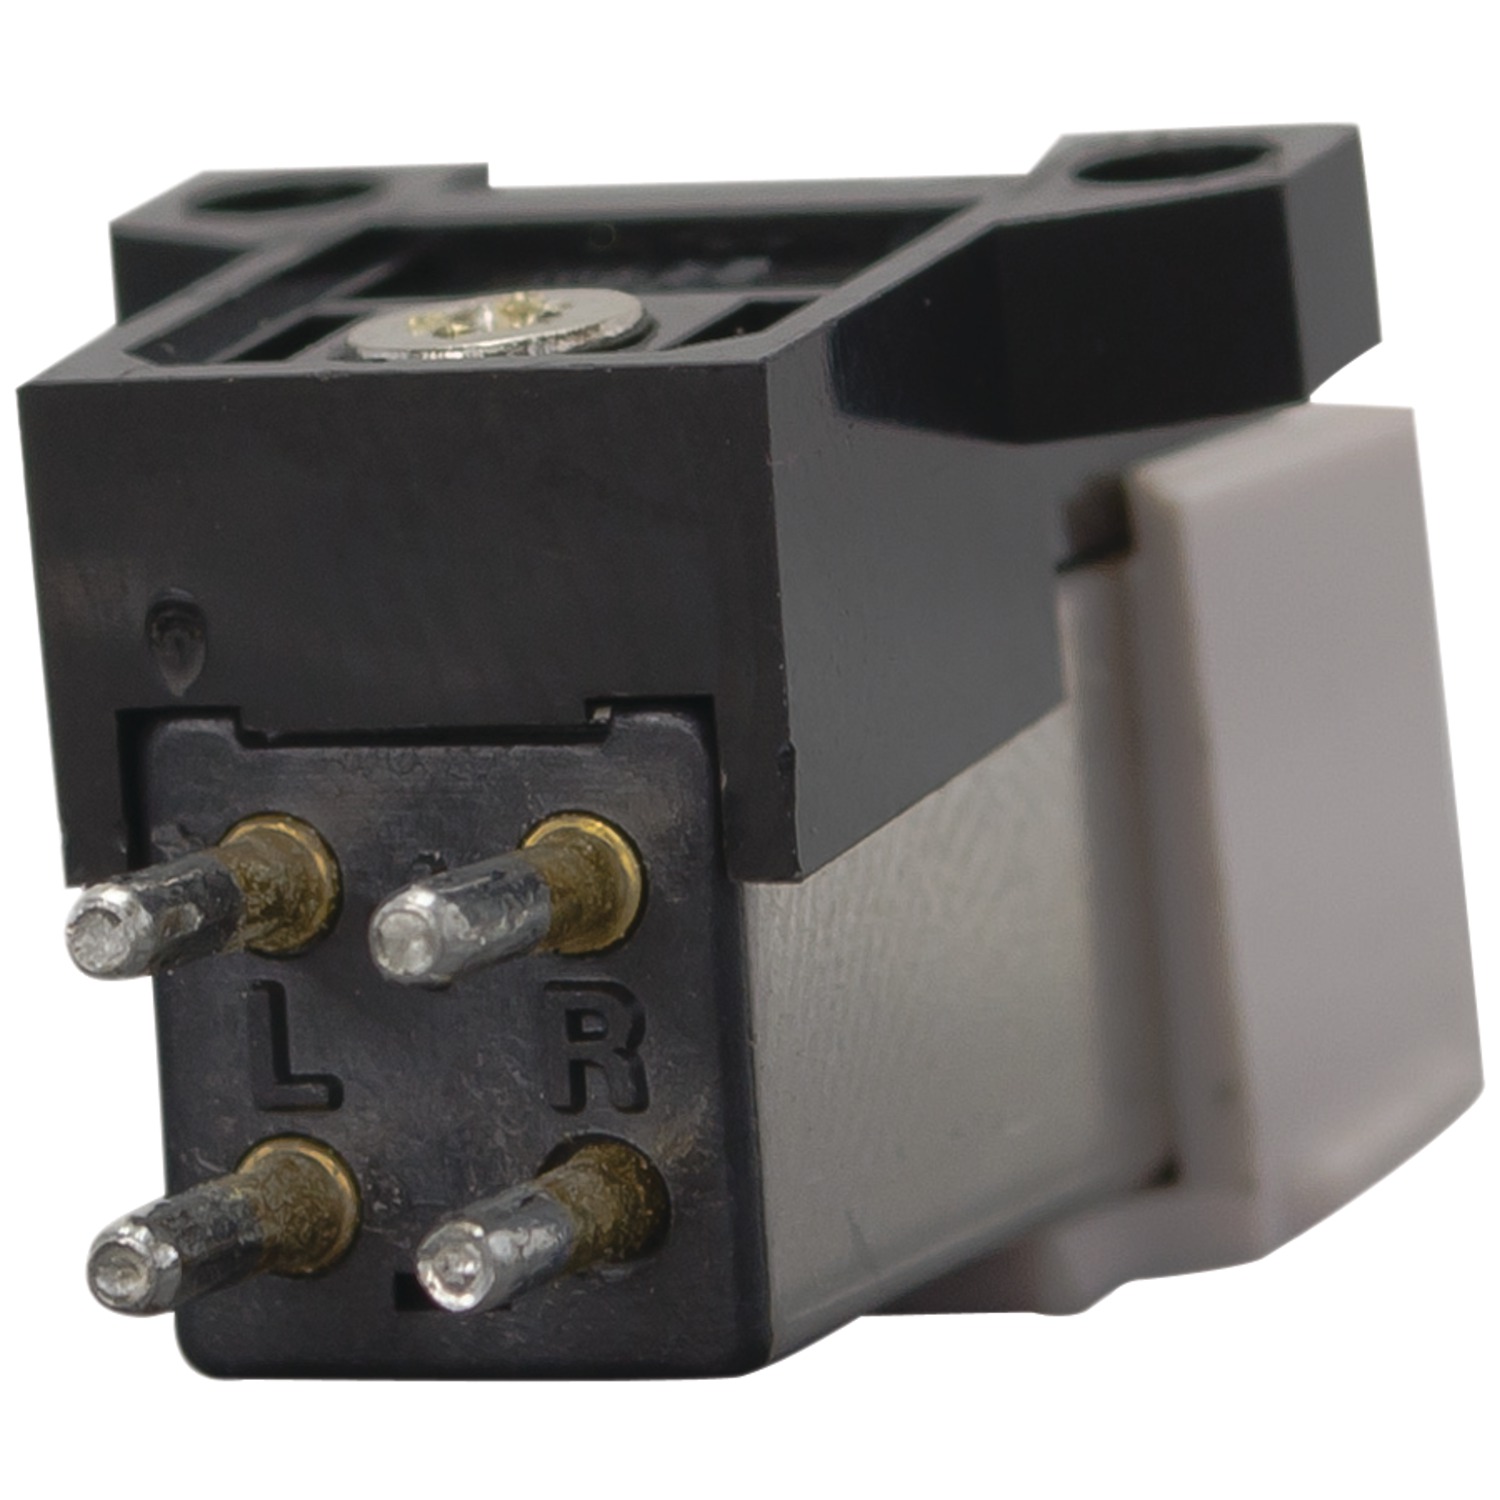 Gemini® Cn-15 Cn-15 Turntable Cartridge With Stylus - image 3 of 3